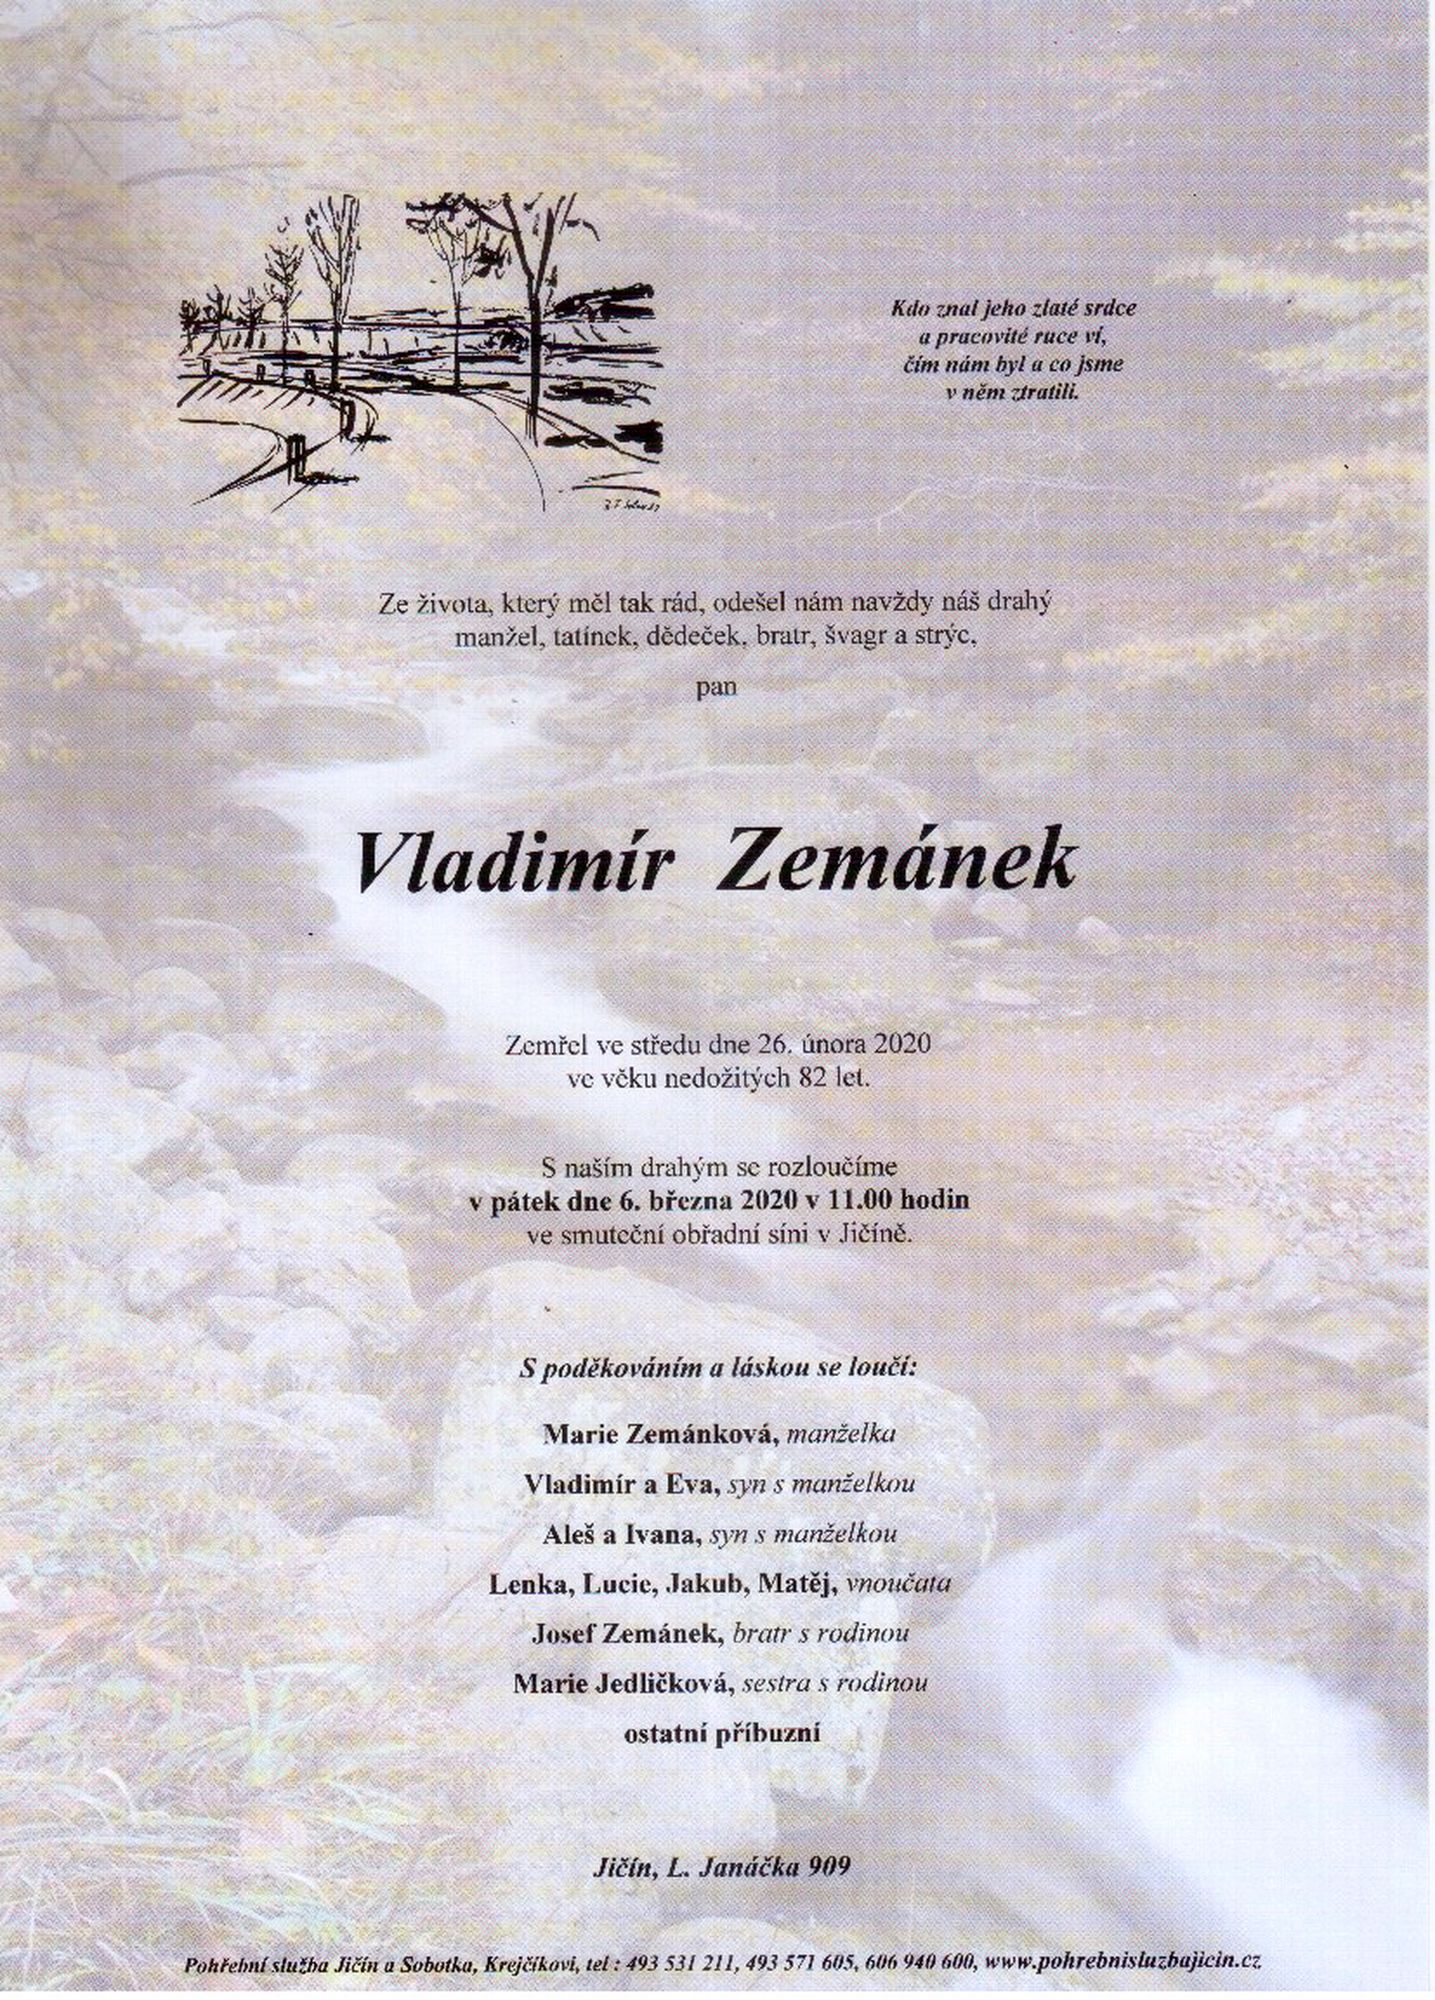 Vladimír Zemánek